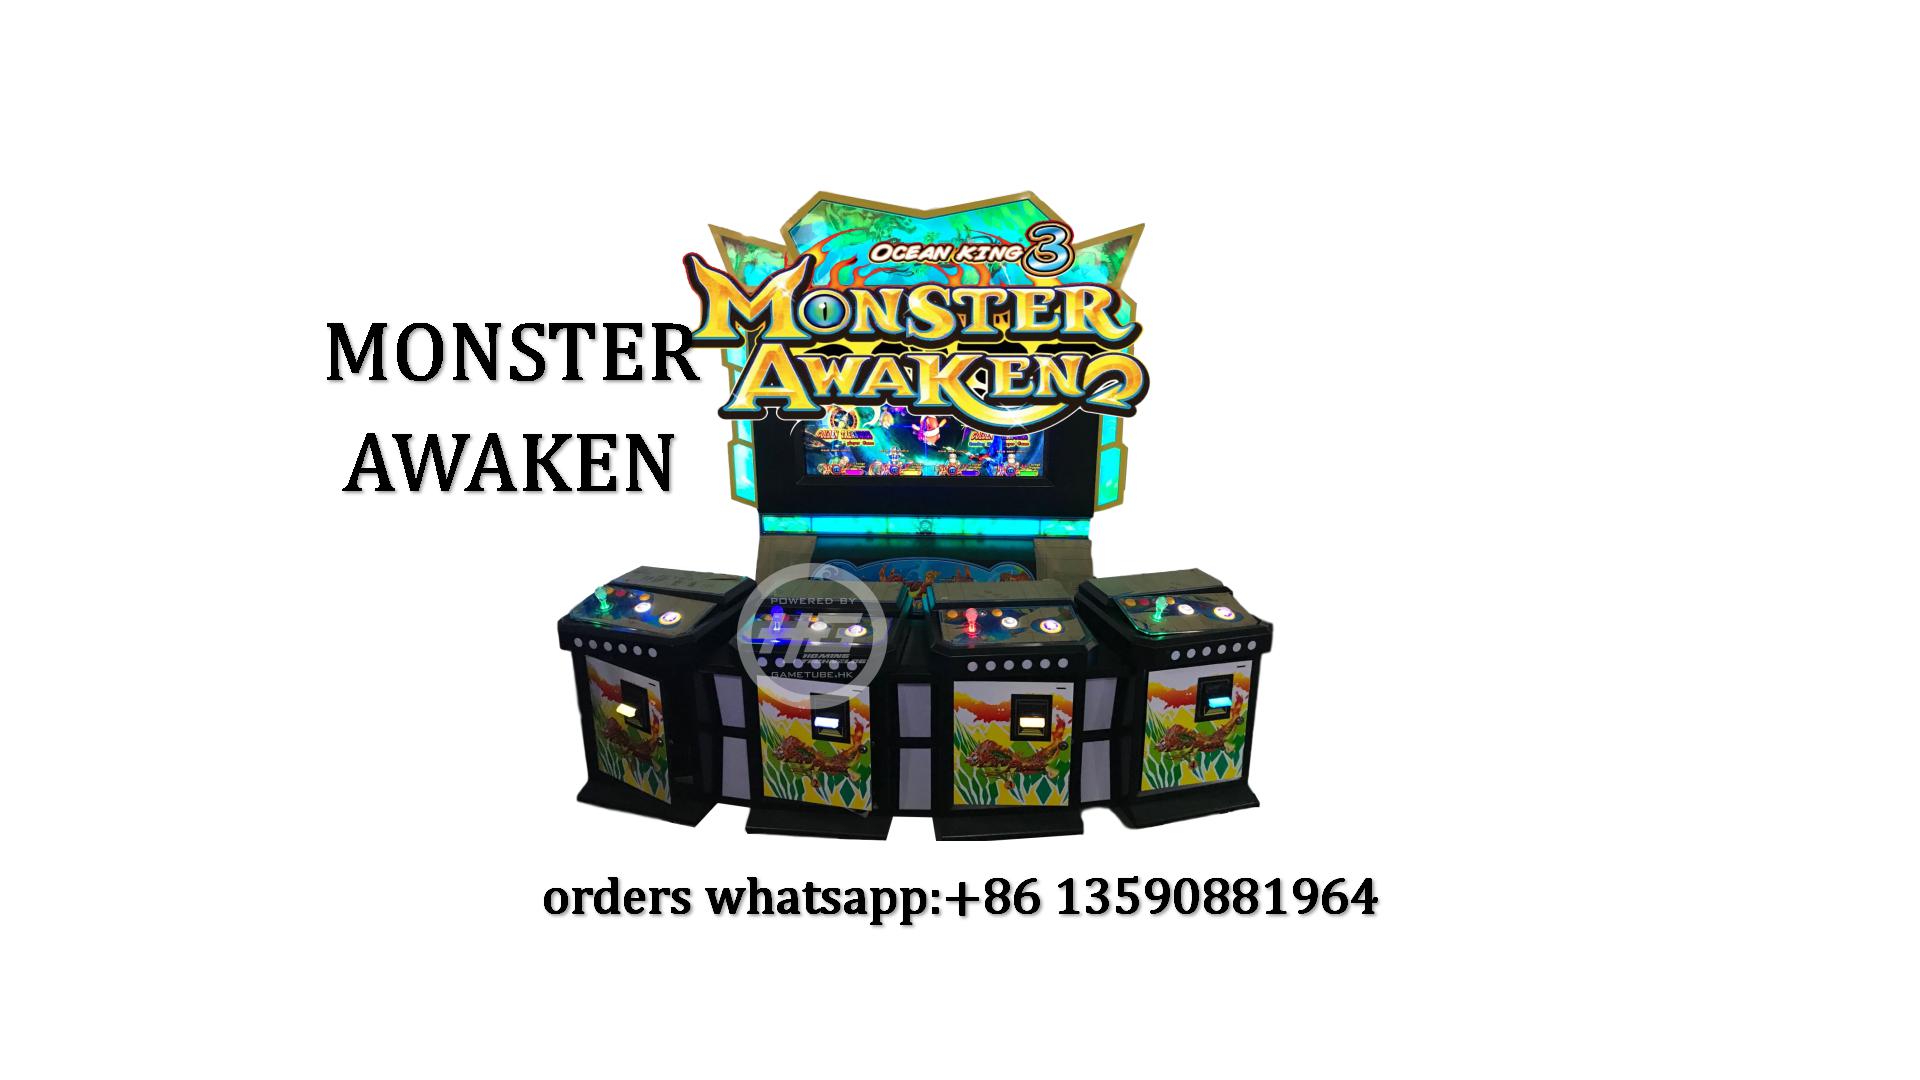 IGS Original Ocean King 3 Monster Awaken Fishing Game,4 Players Upright Fish Game Machine For Sale